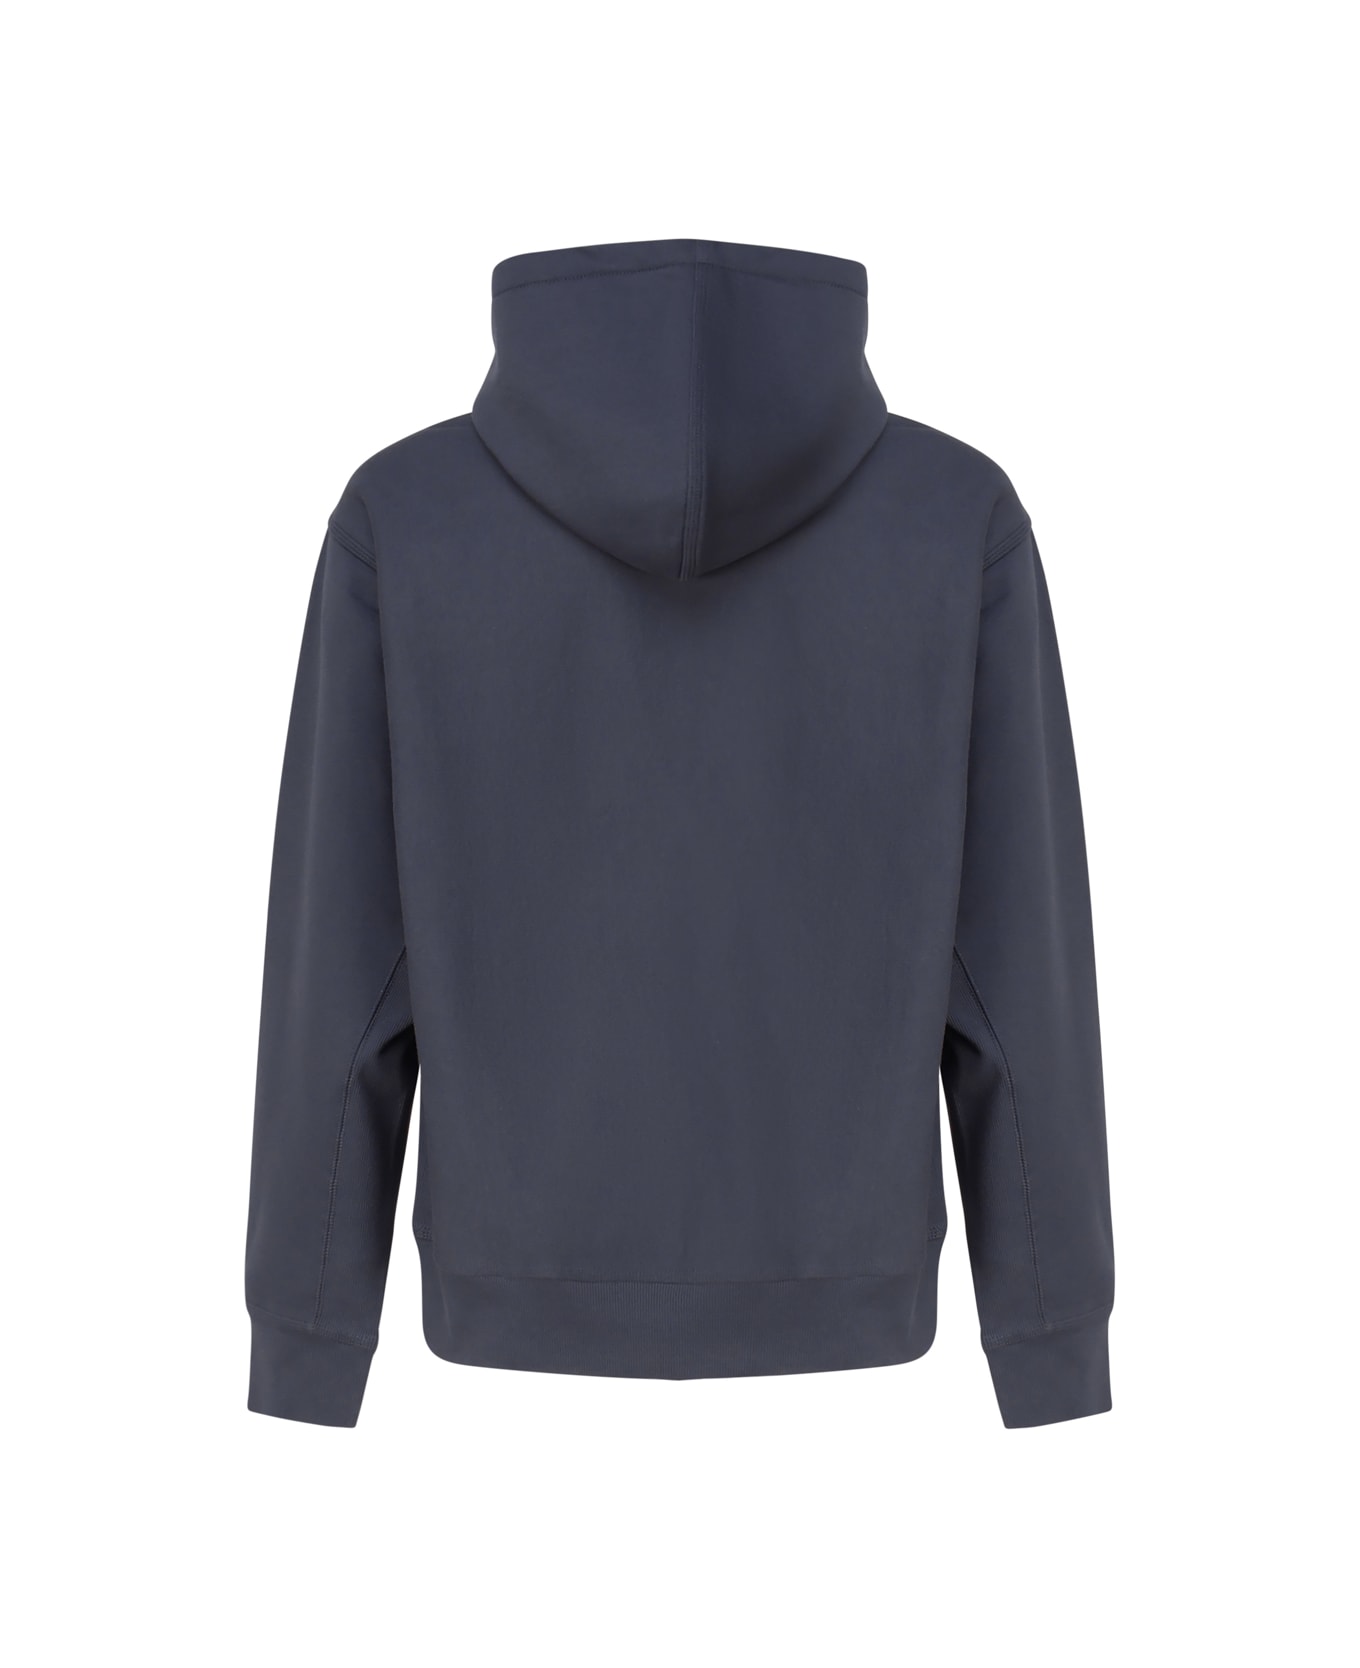 Carhartt Sweatshirt With Hood And Kangaroo Pockets - ZEUS